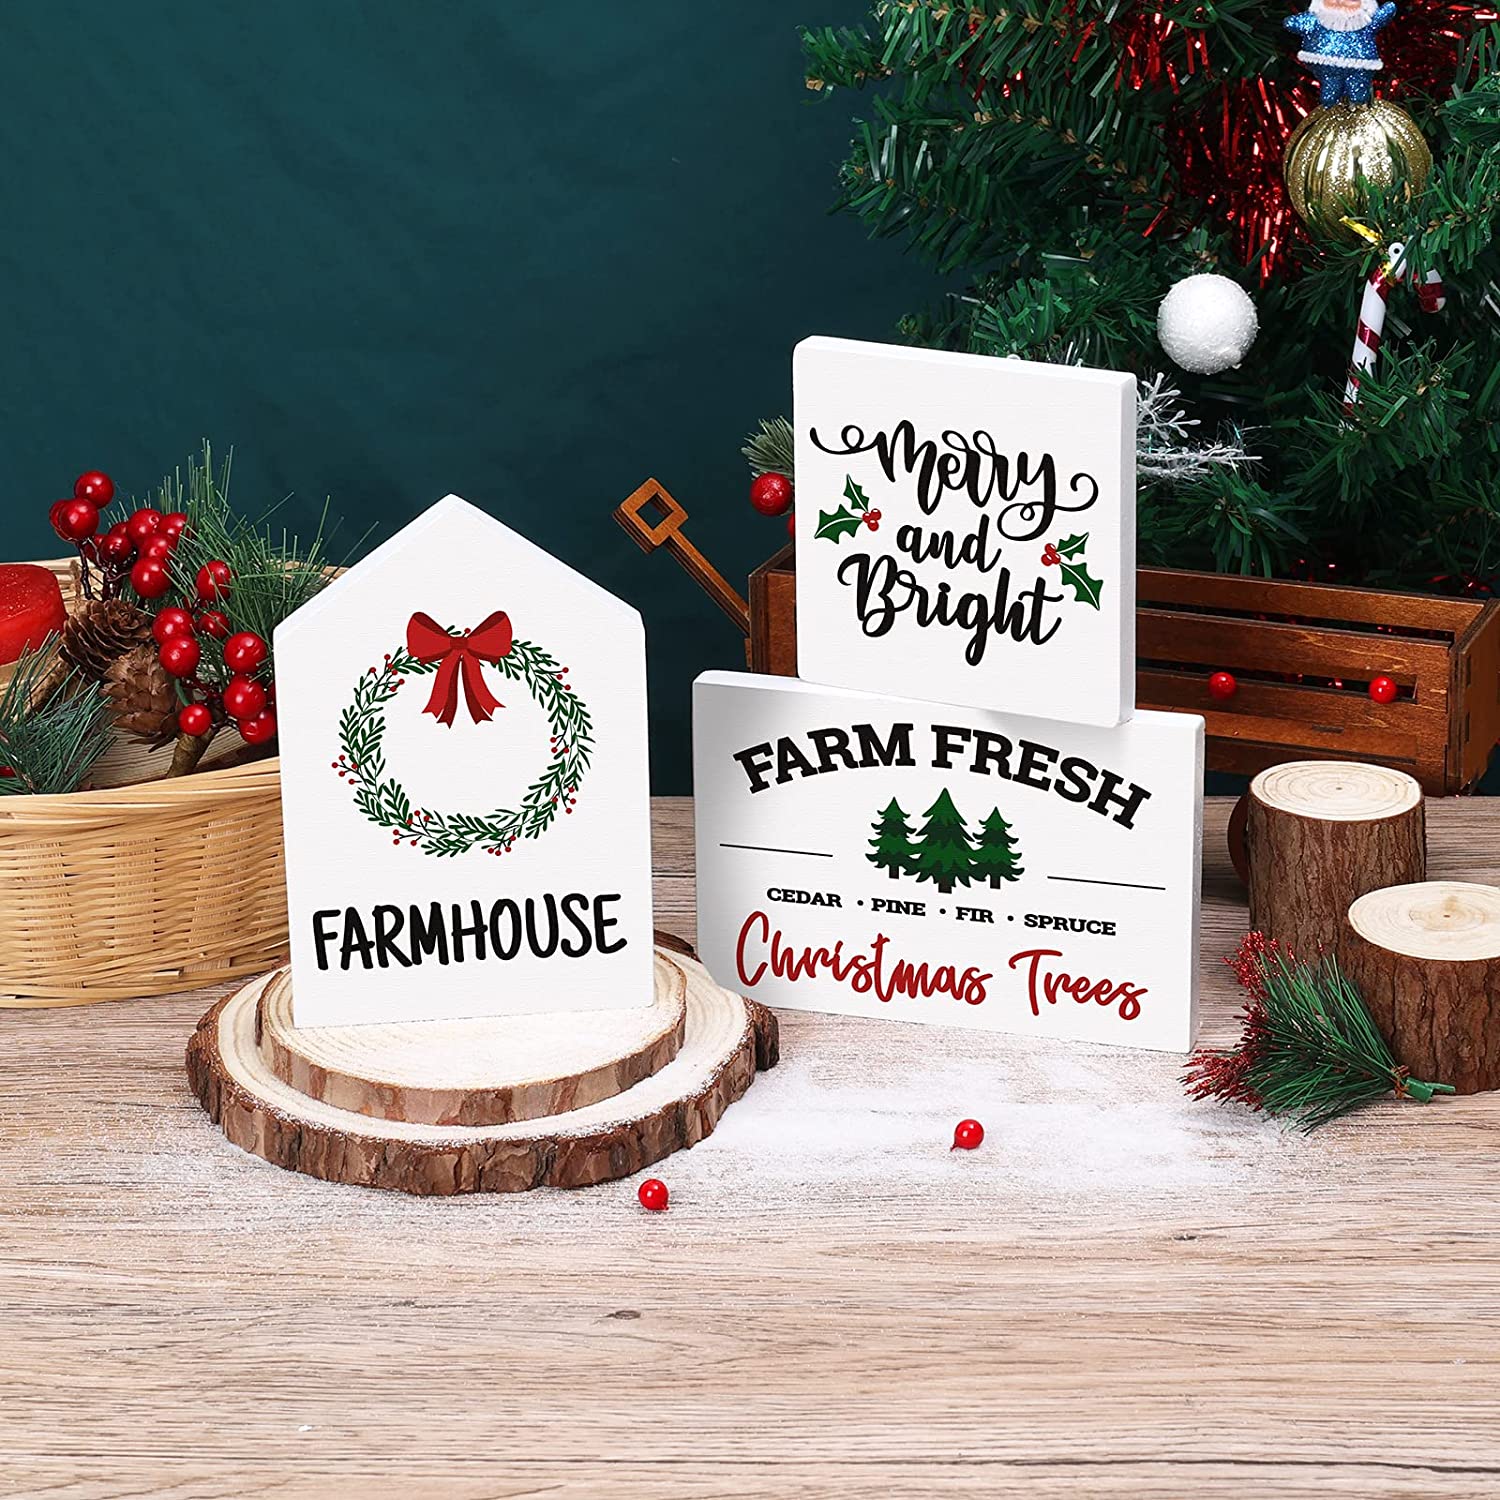 Christmas Tree Farm Decor Seasonal Holiday 3D Wood Sign momhomedecor